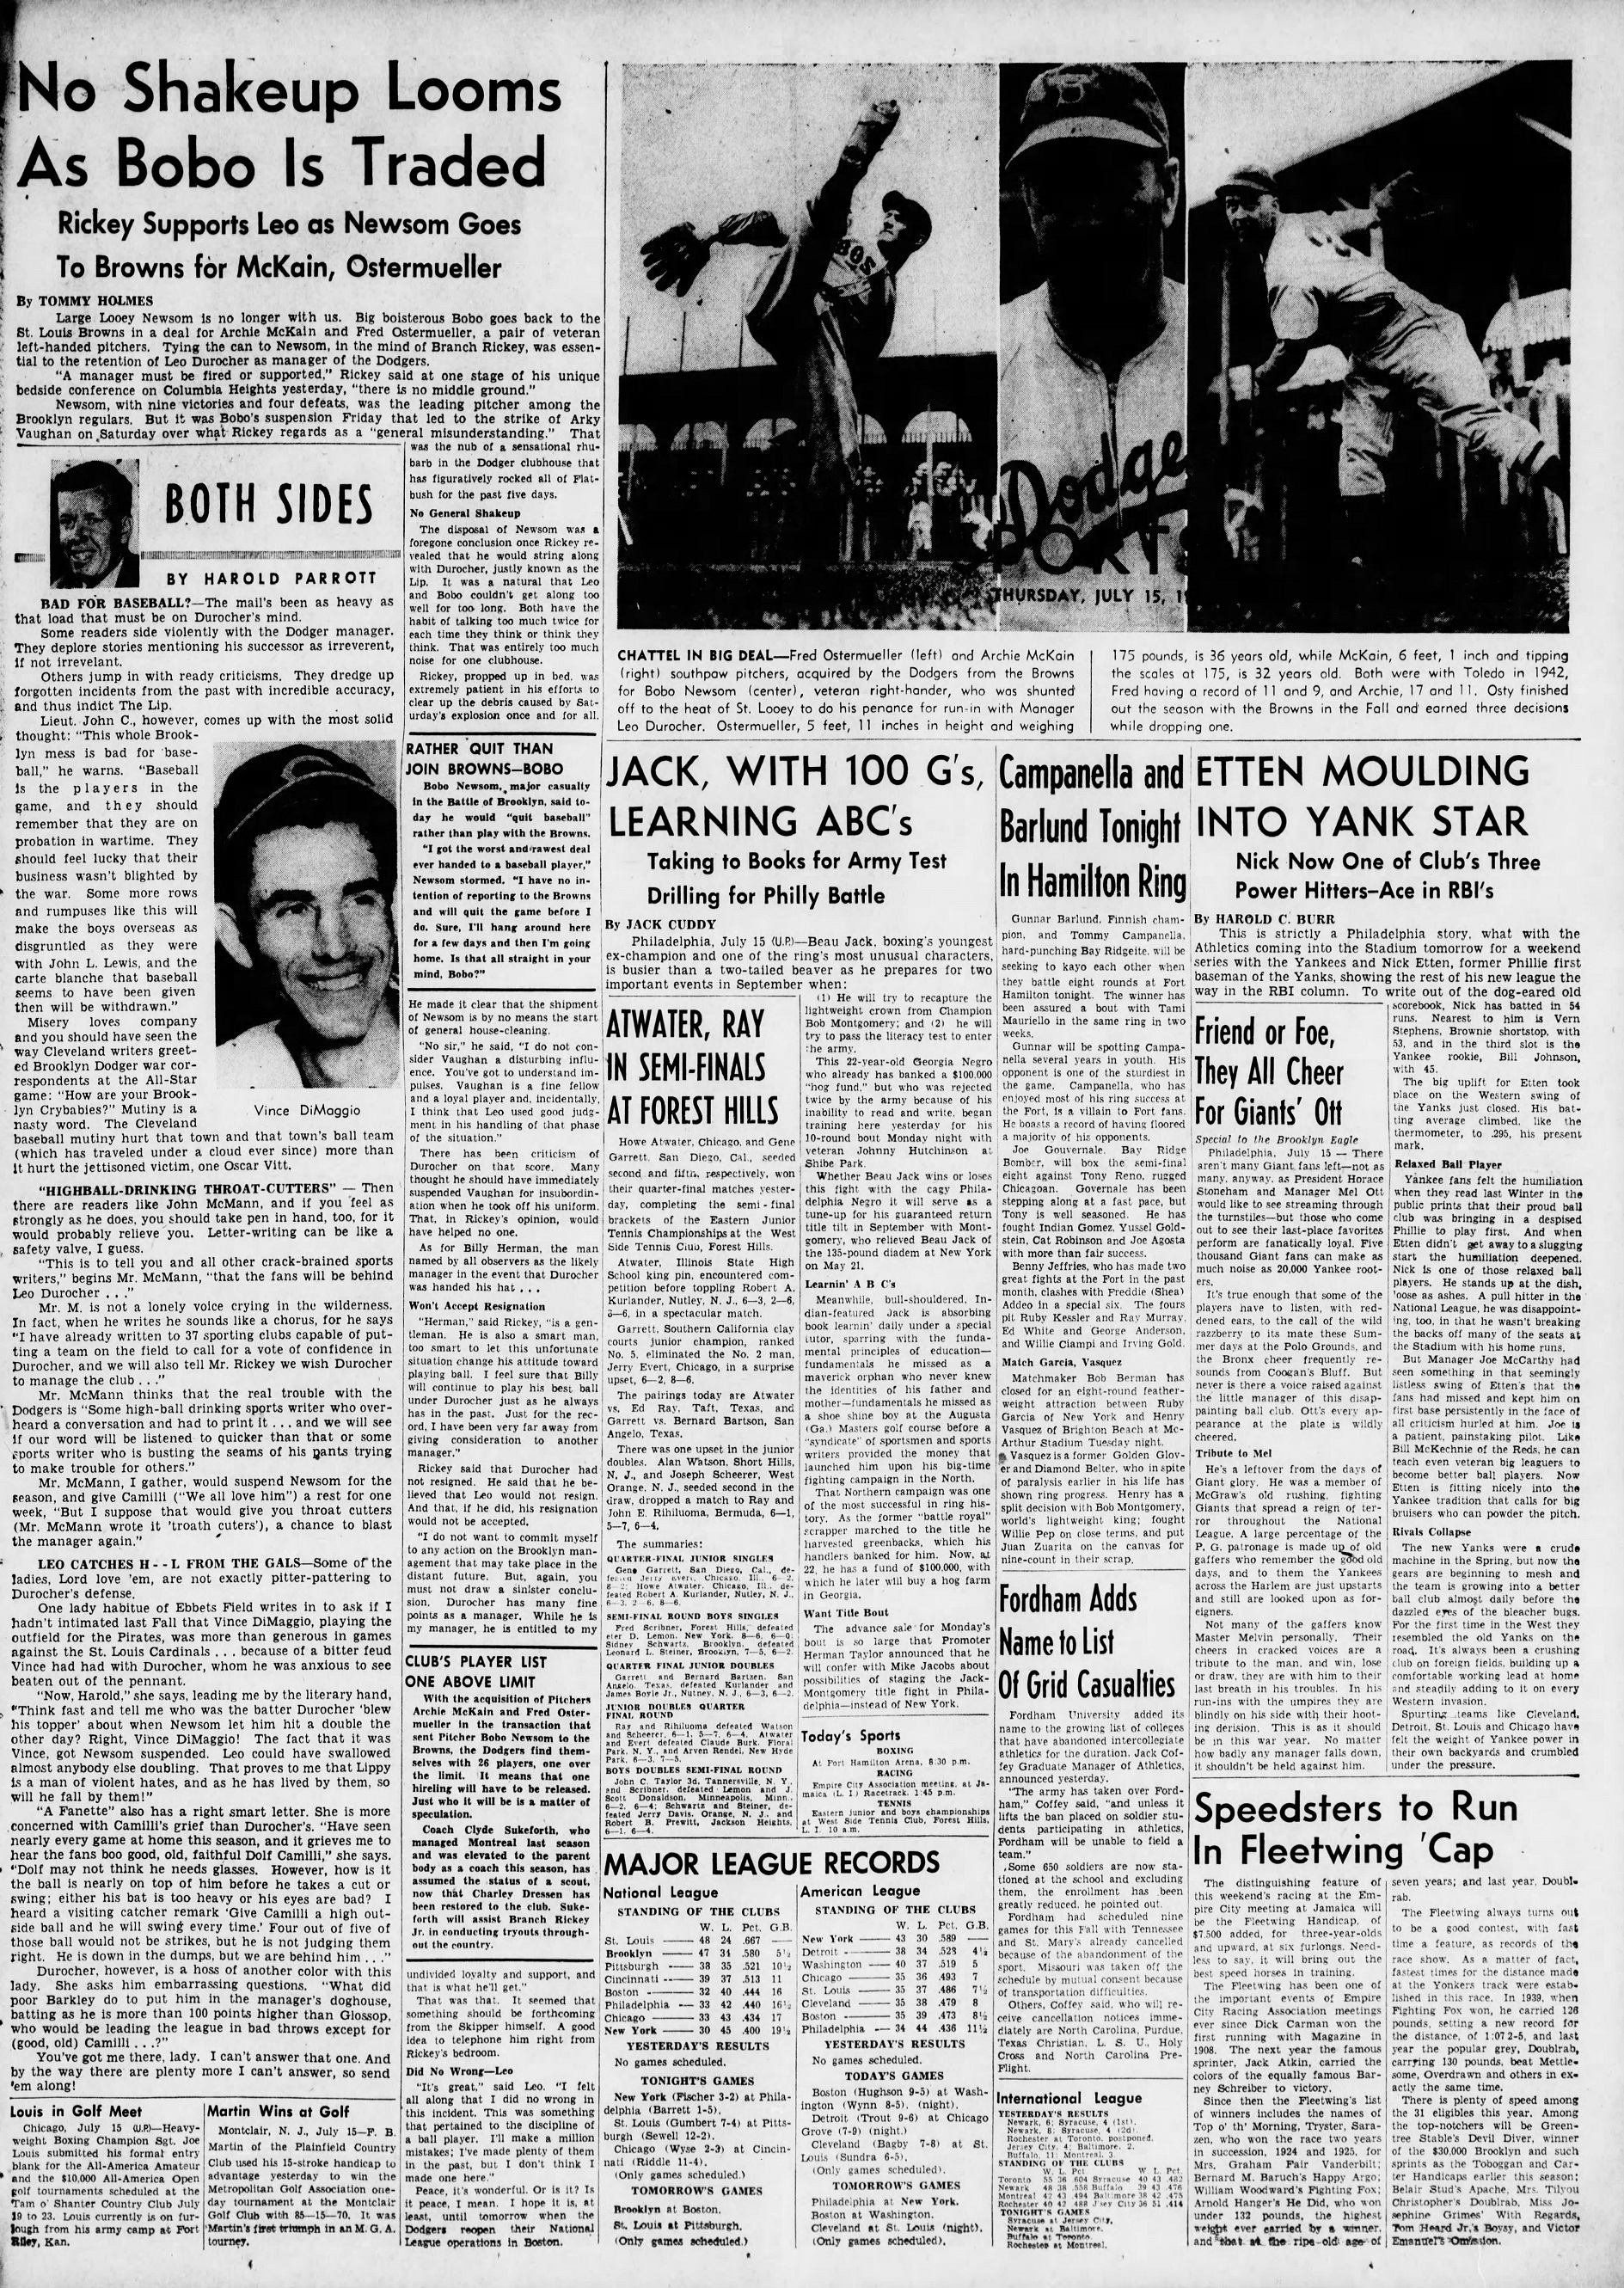 The_Brooklyn_Daily_Eagle_Thu__Jul_15__1943_(4).jpg